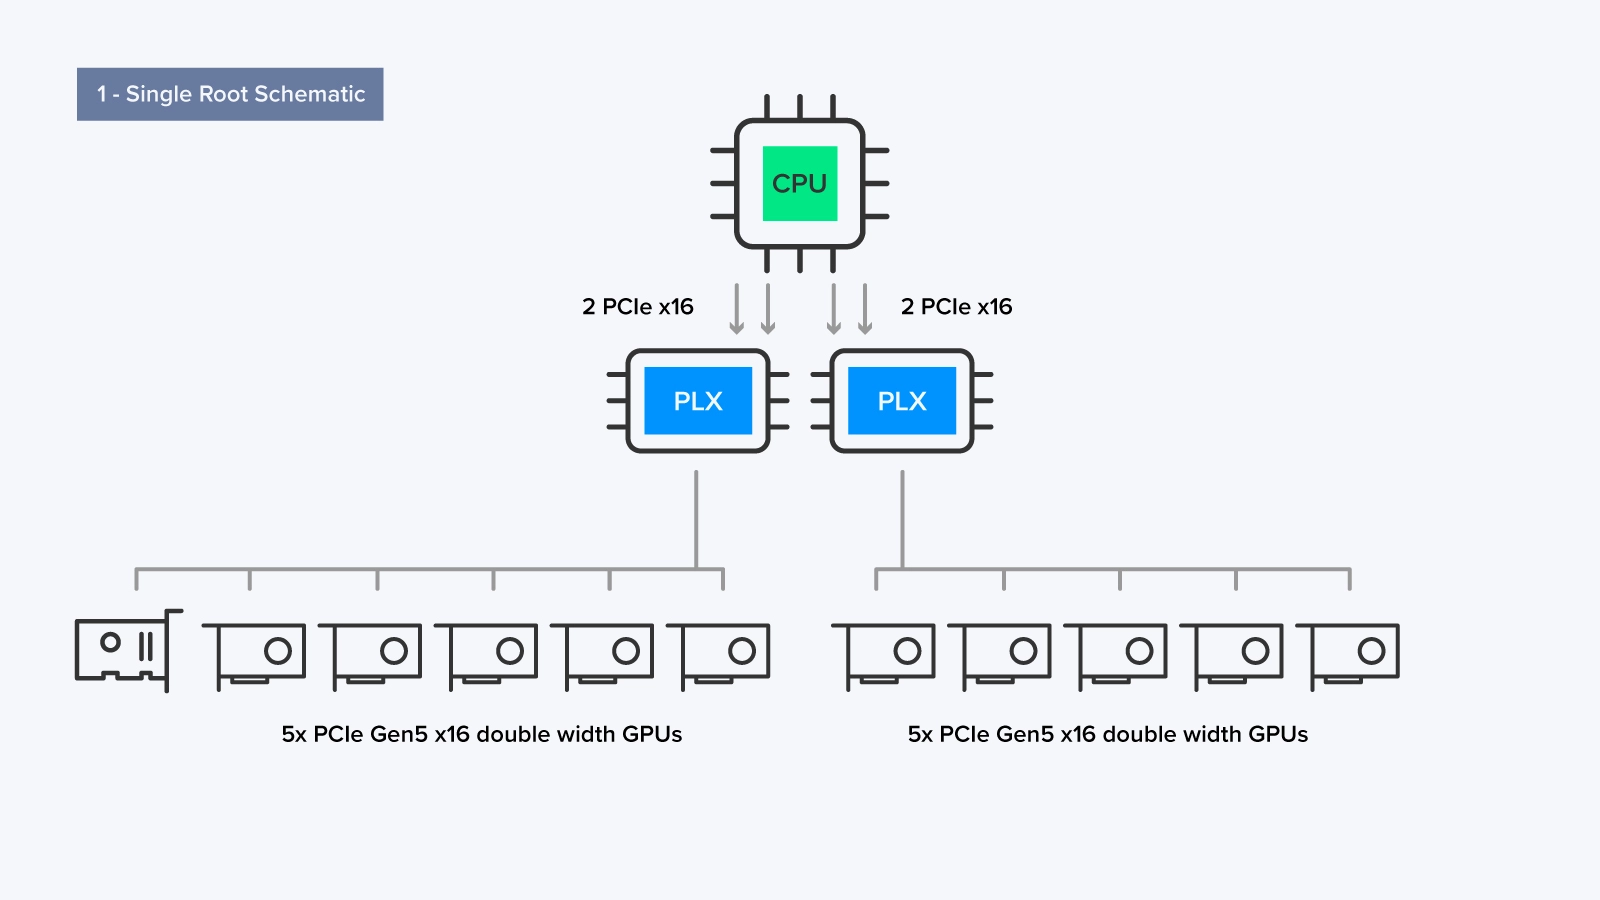 single root architecture - 2 PLX to 1 CPU